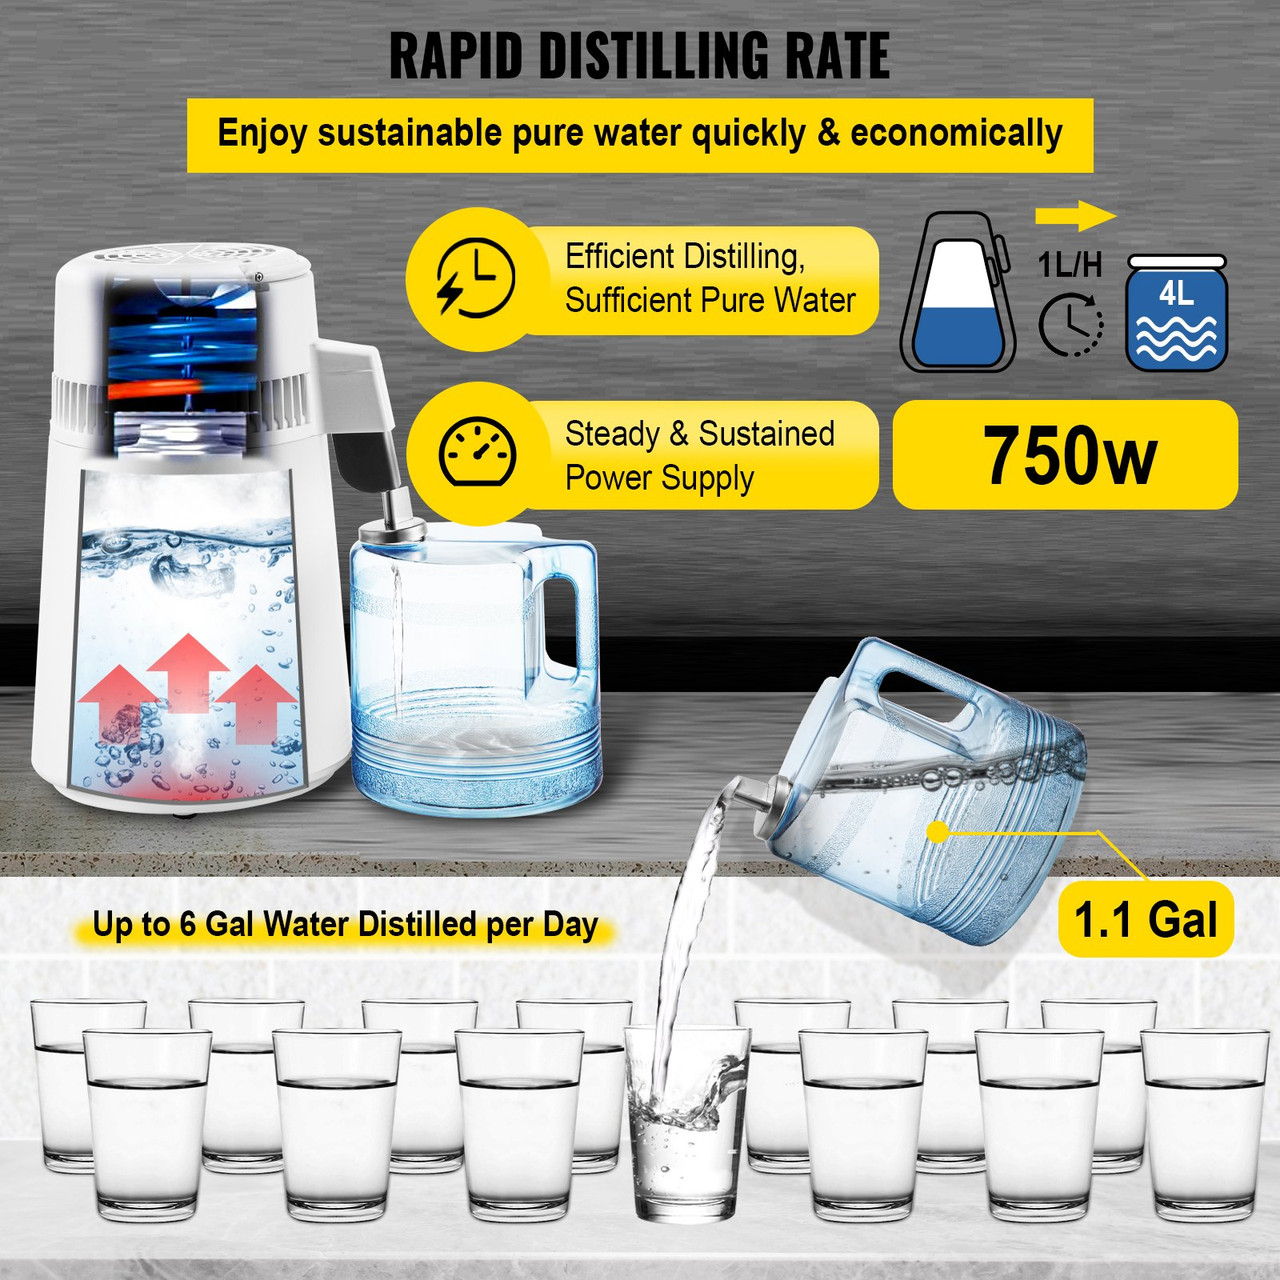 Best Home Water Distiller - Distilled Water Machine for Home Use